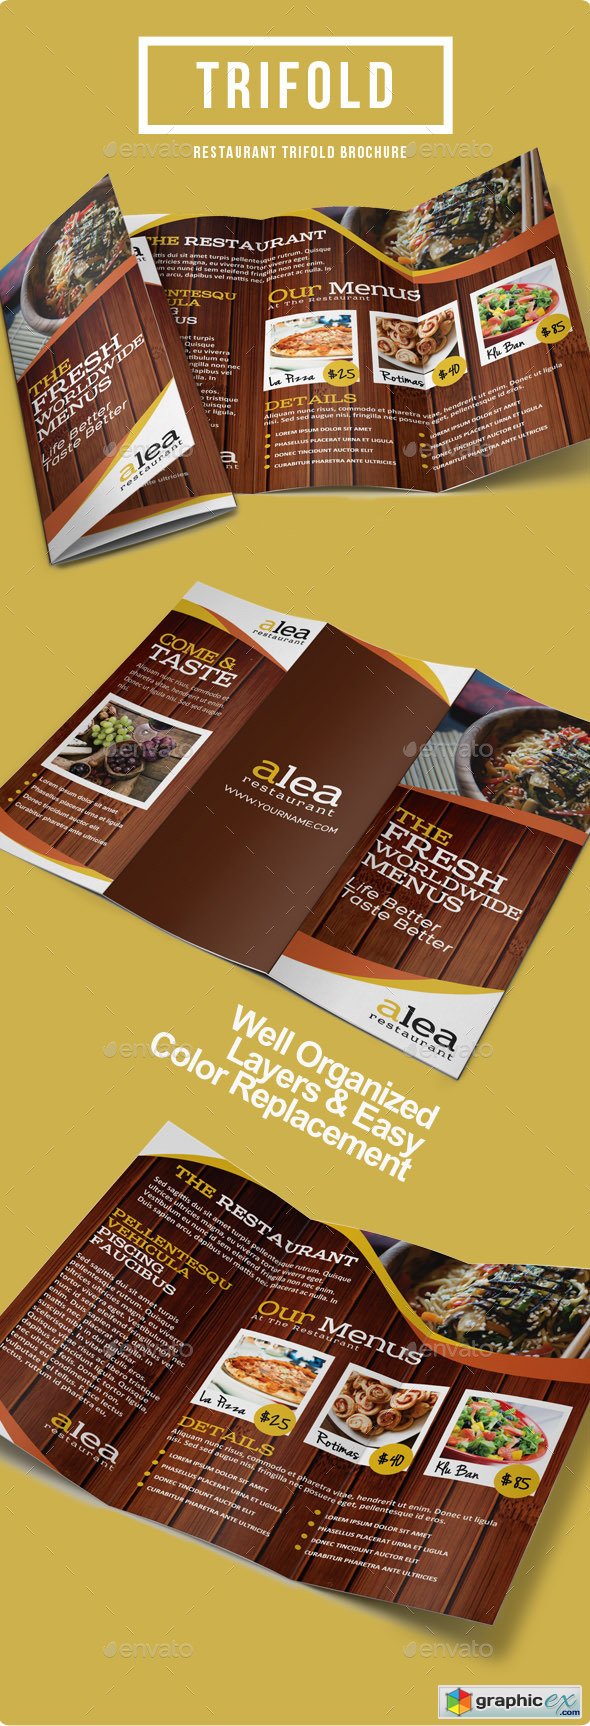 Alea Restaurant Trifold Brochure